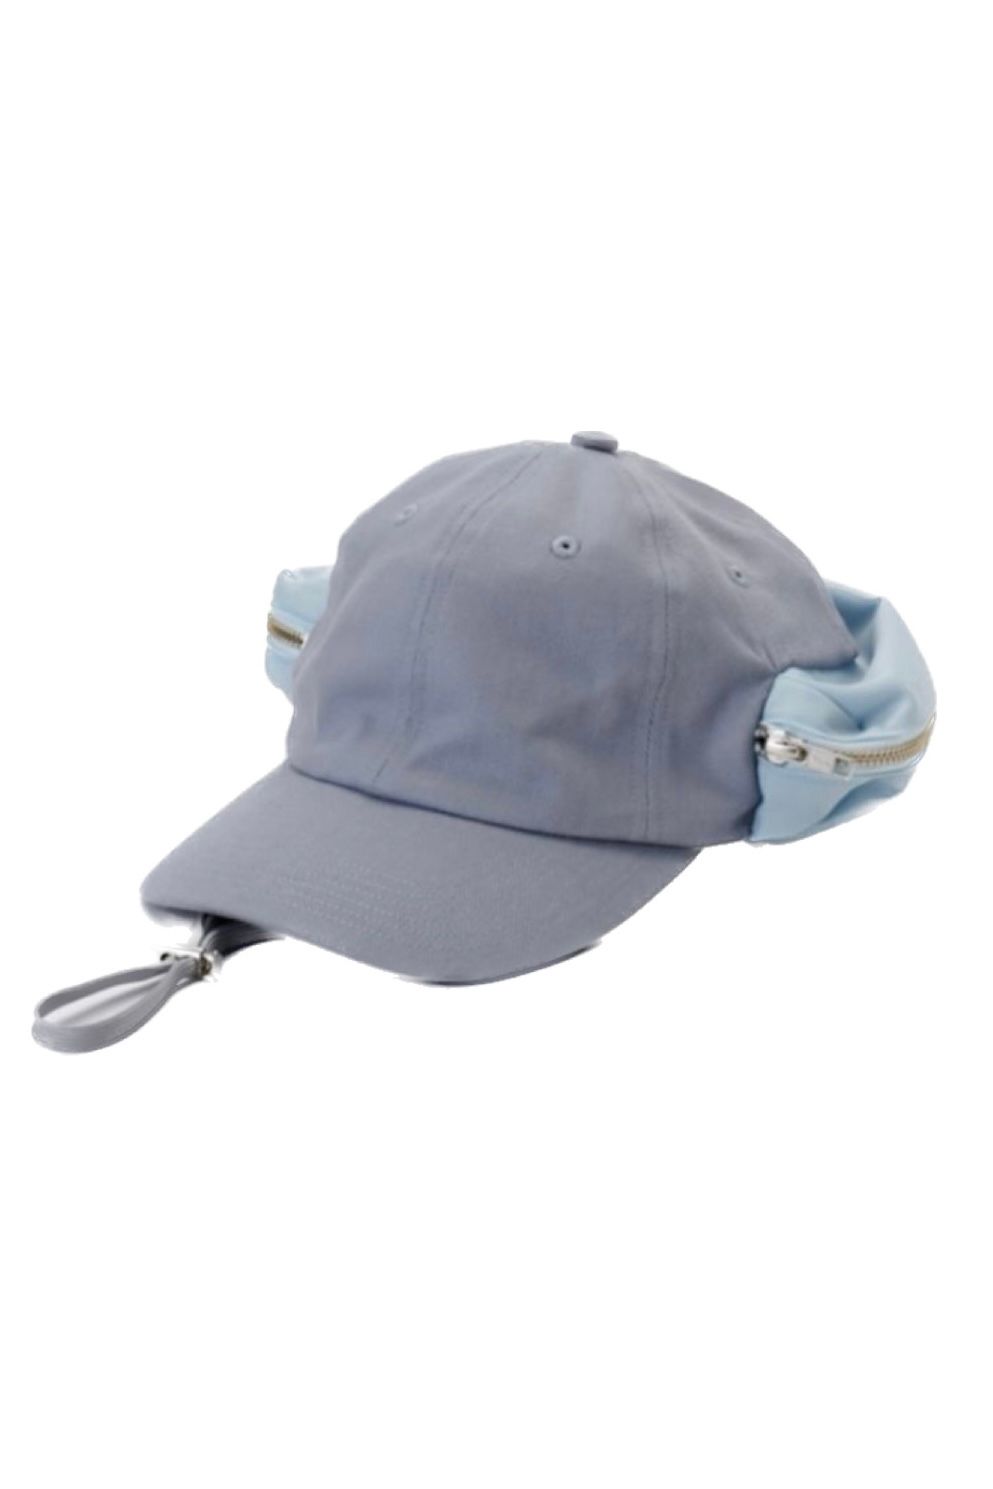 KIJIMA TAKAYUKI - 6panel cap w/pocket & sunshade -blue gray- 23ss 